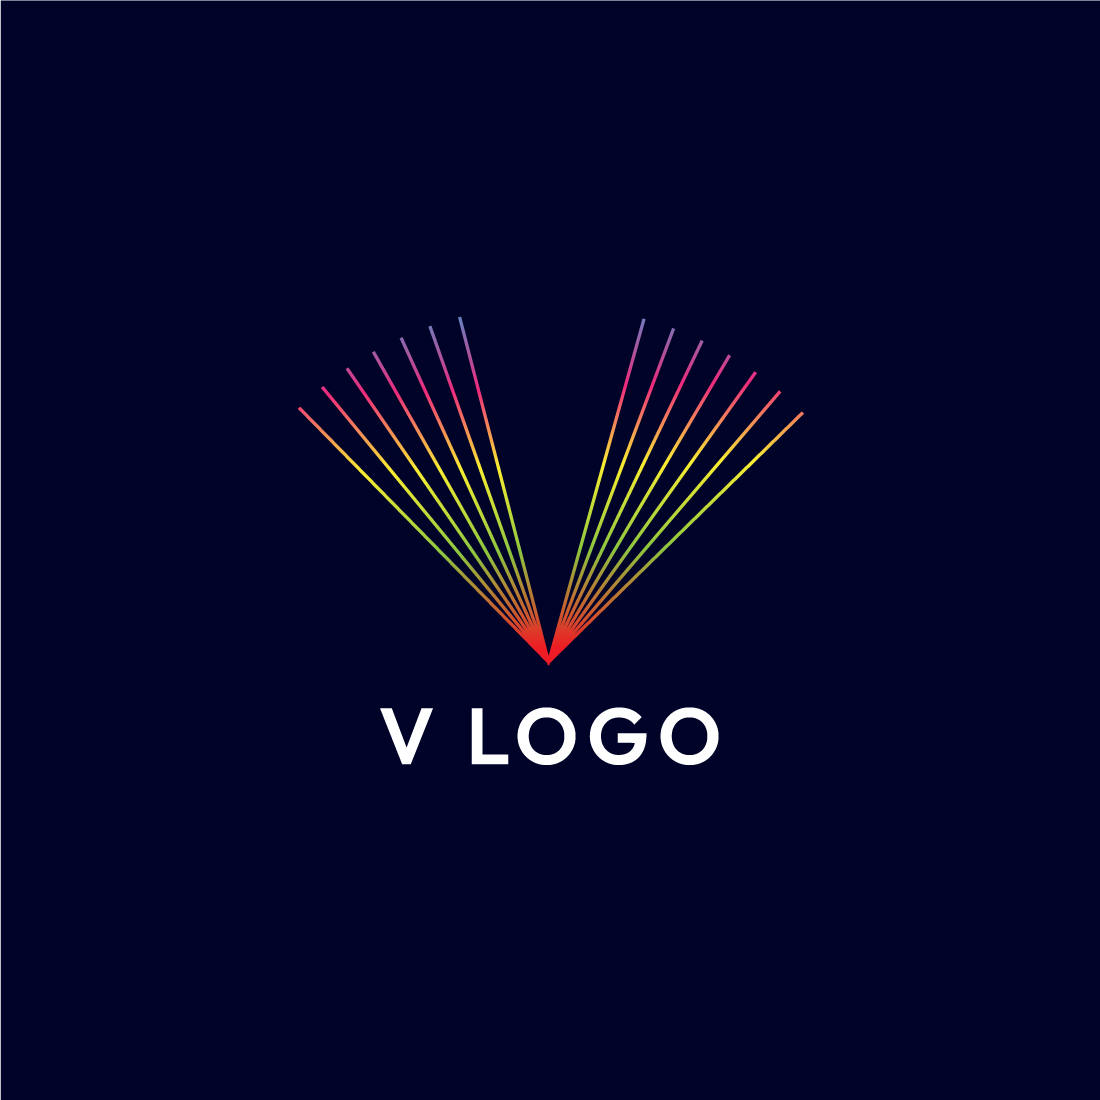 Sleek Line Art Letter V Logo Design - Professional Branding Solution preview image.